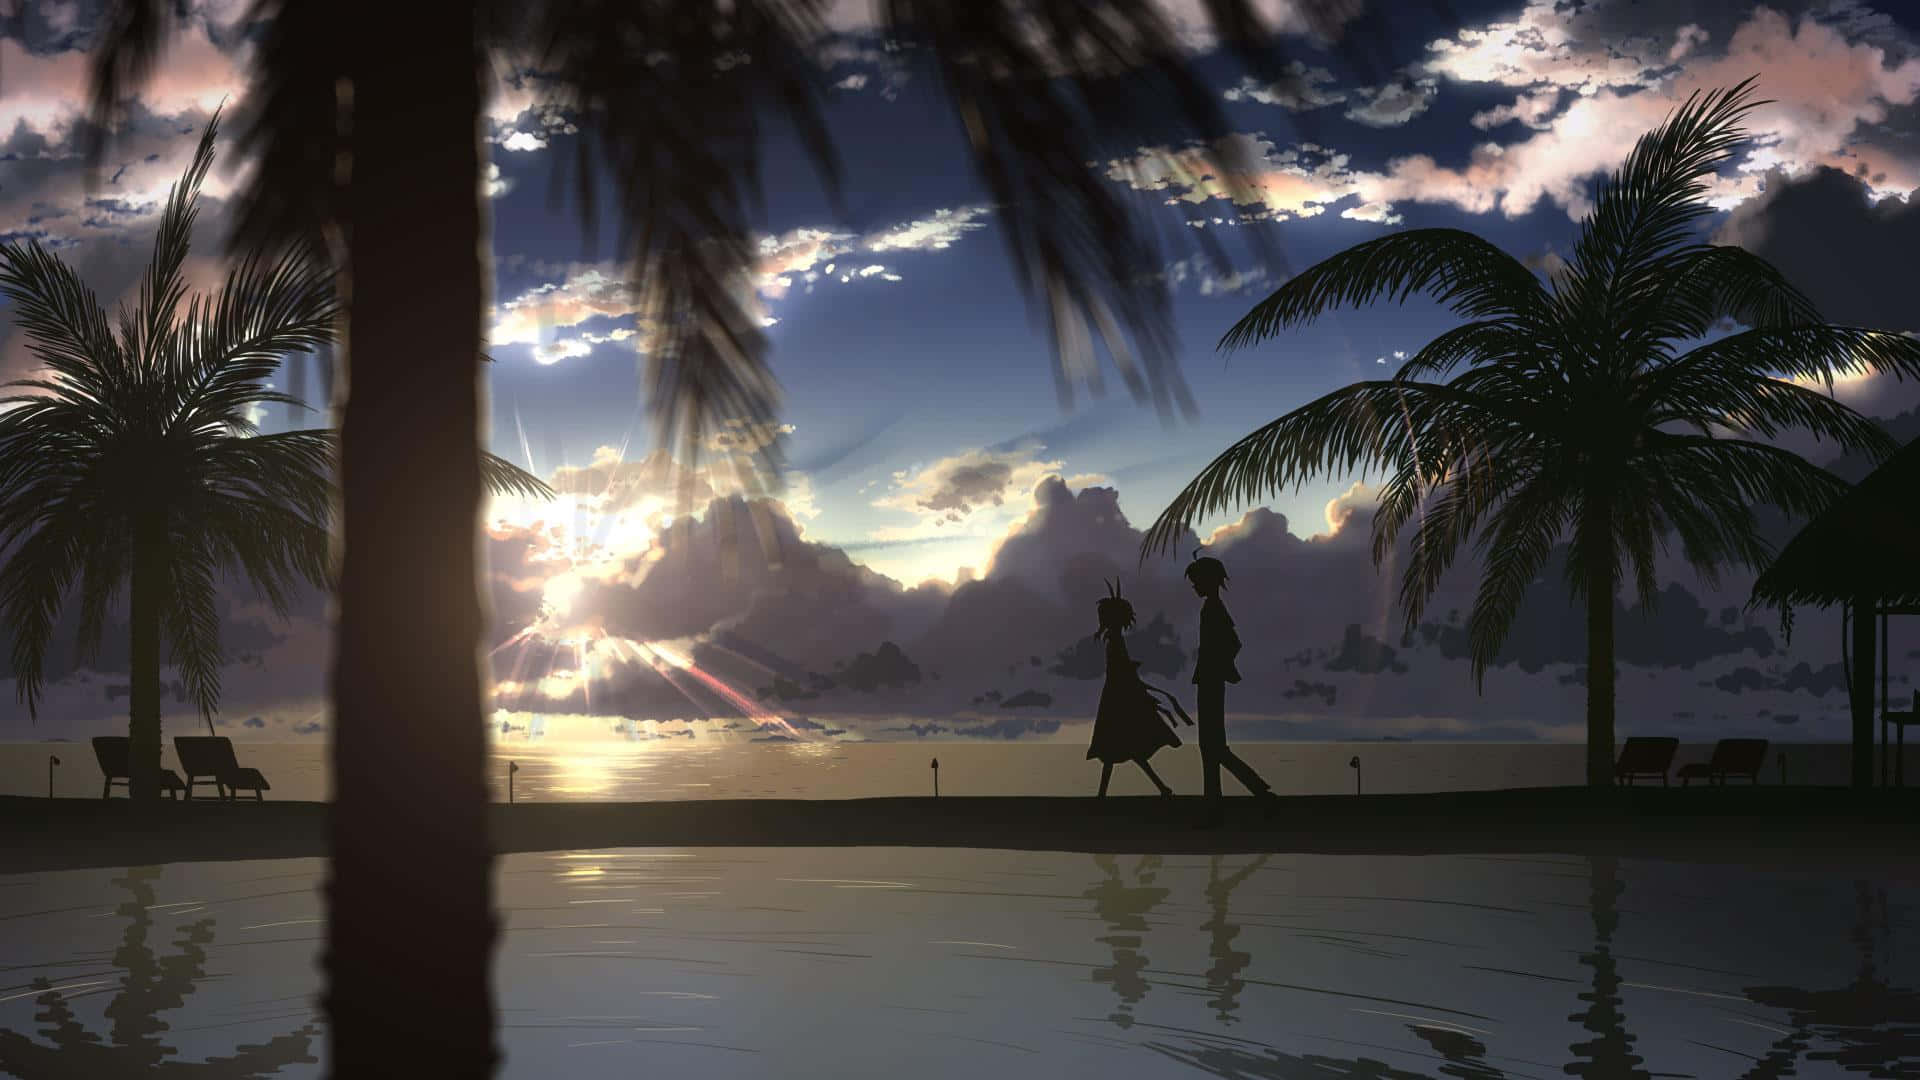 Serene Anime Sunset Scenery